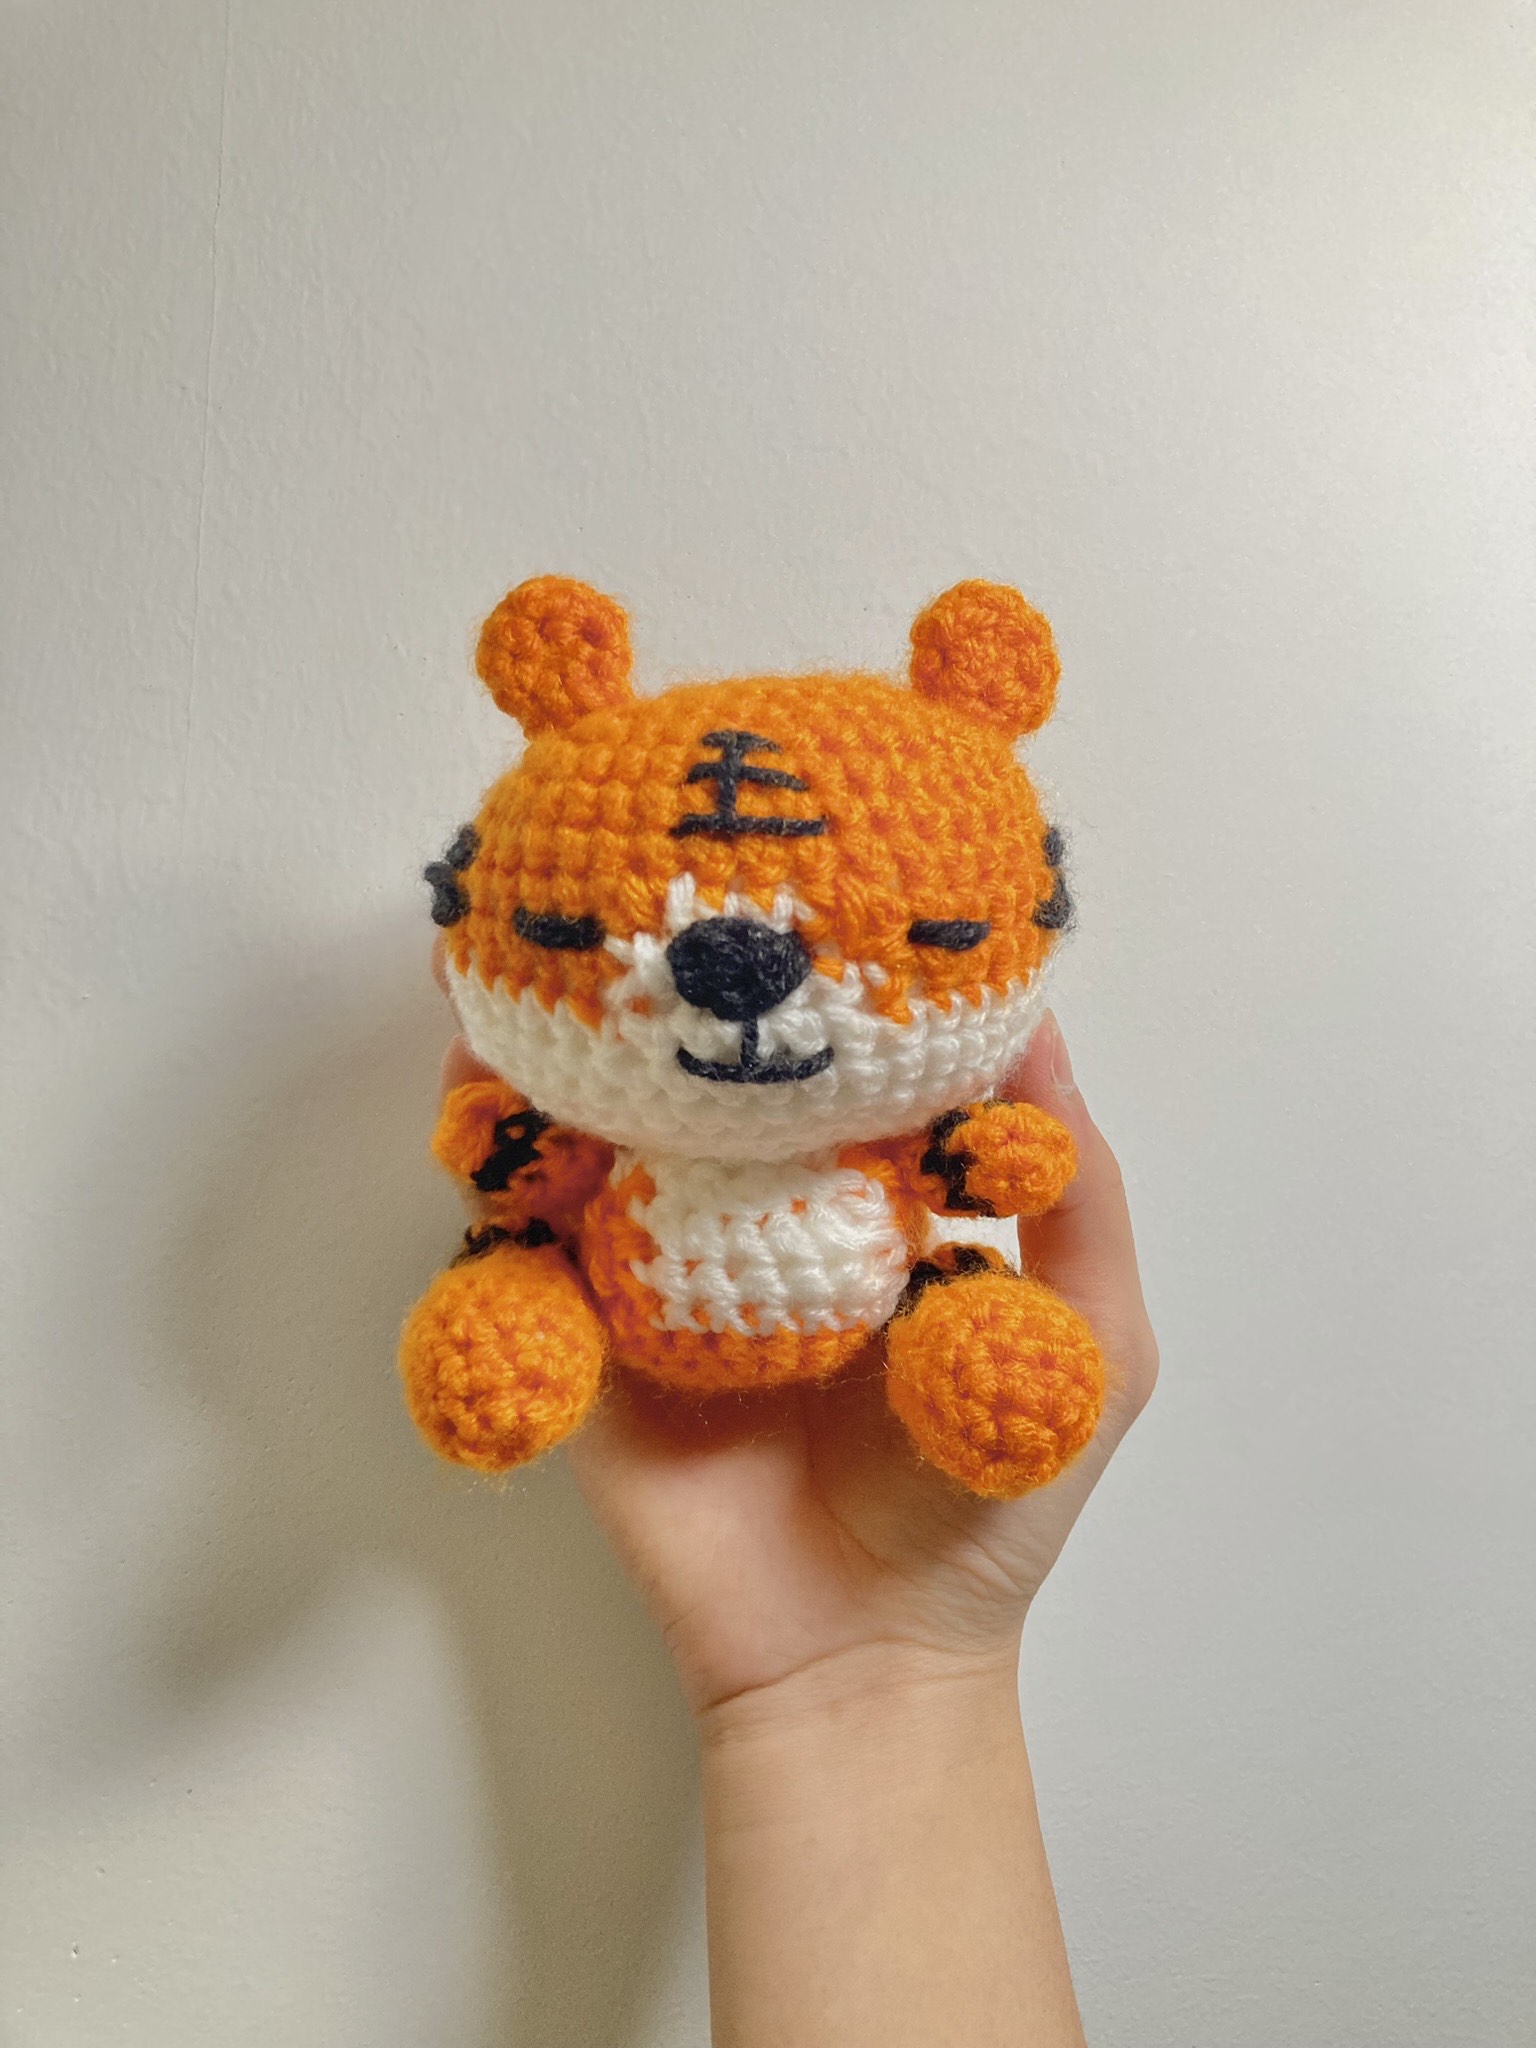 An orange crochet tiger